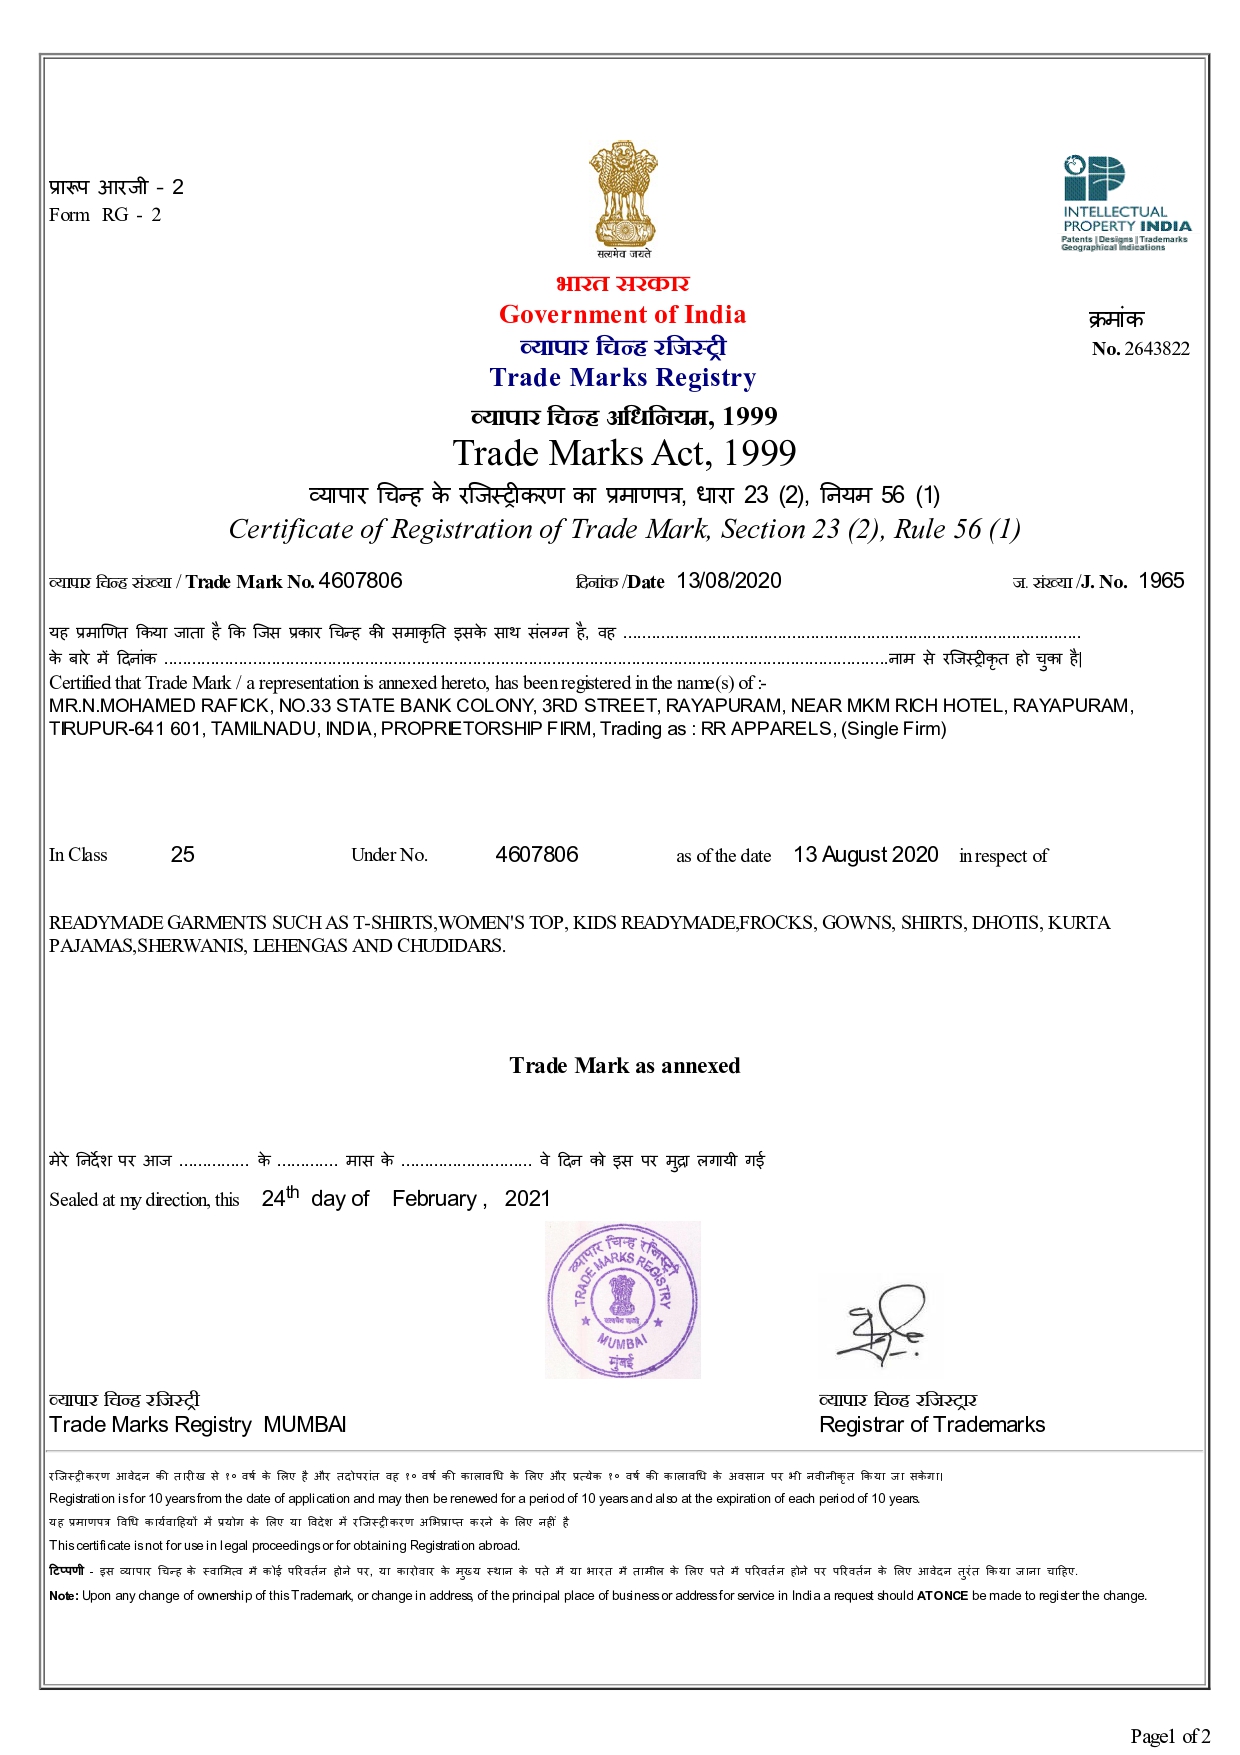 Trademark Registration certificate sample1